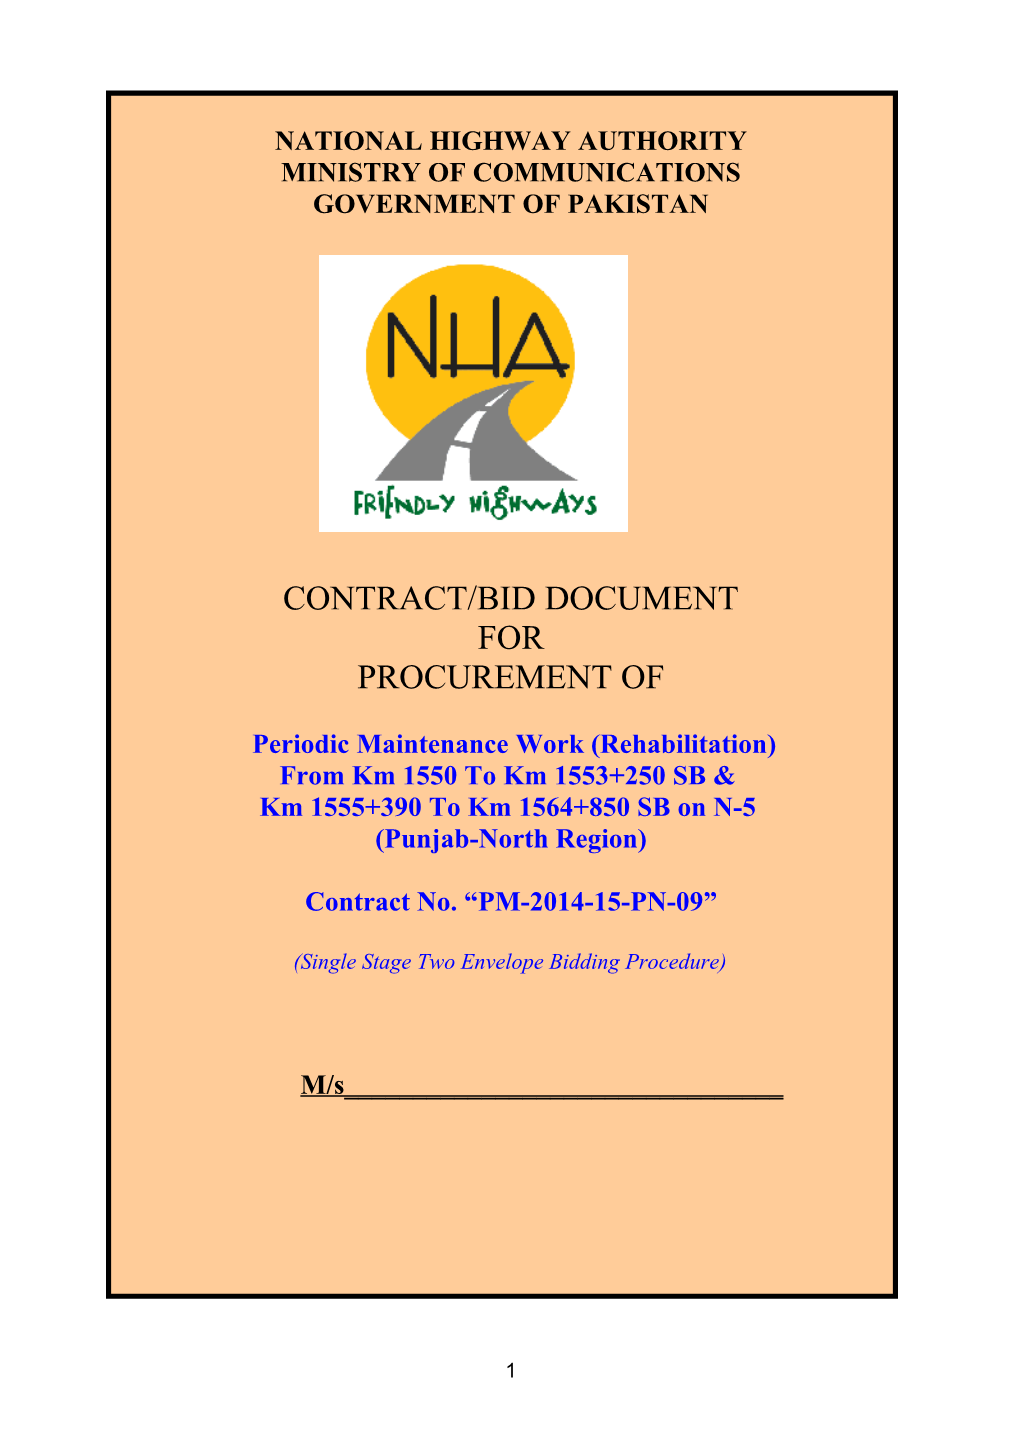 Standard Form of Bidding Documents for Procurement of Civil Works s1